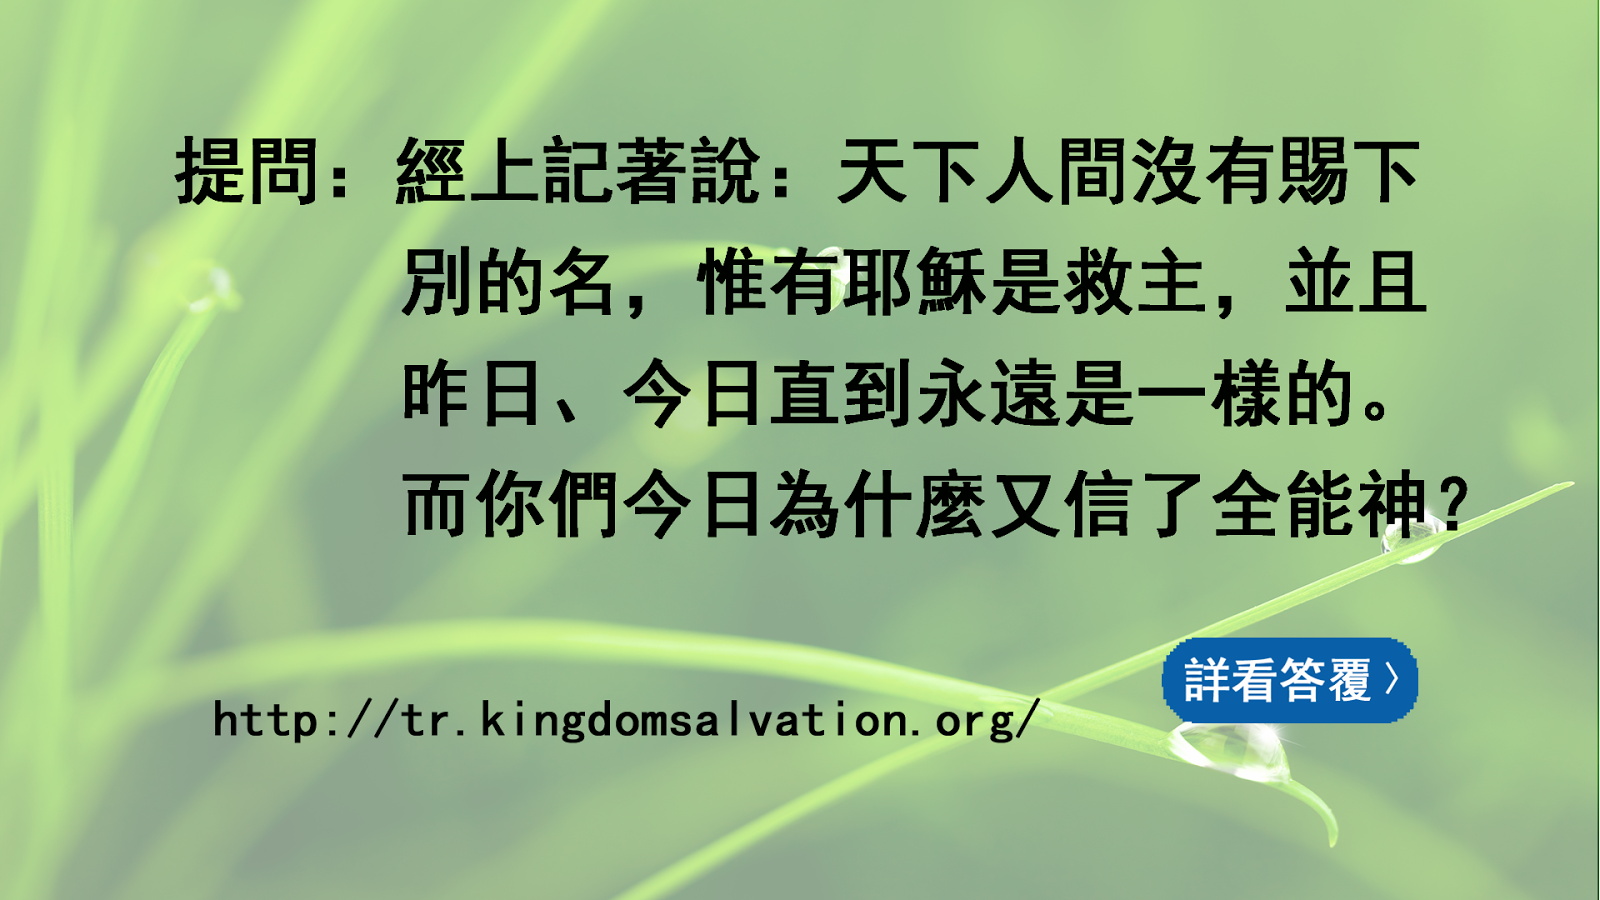 http://tr.kingdomsalvation.org/fuyin-001.html